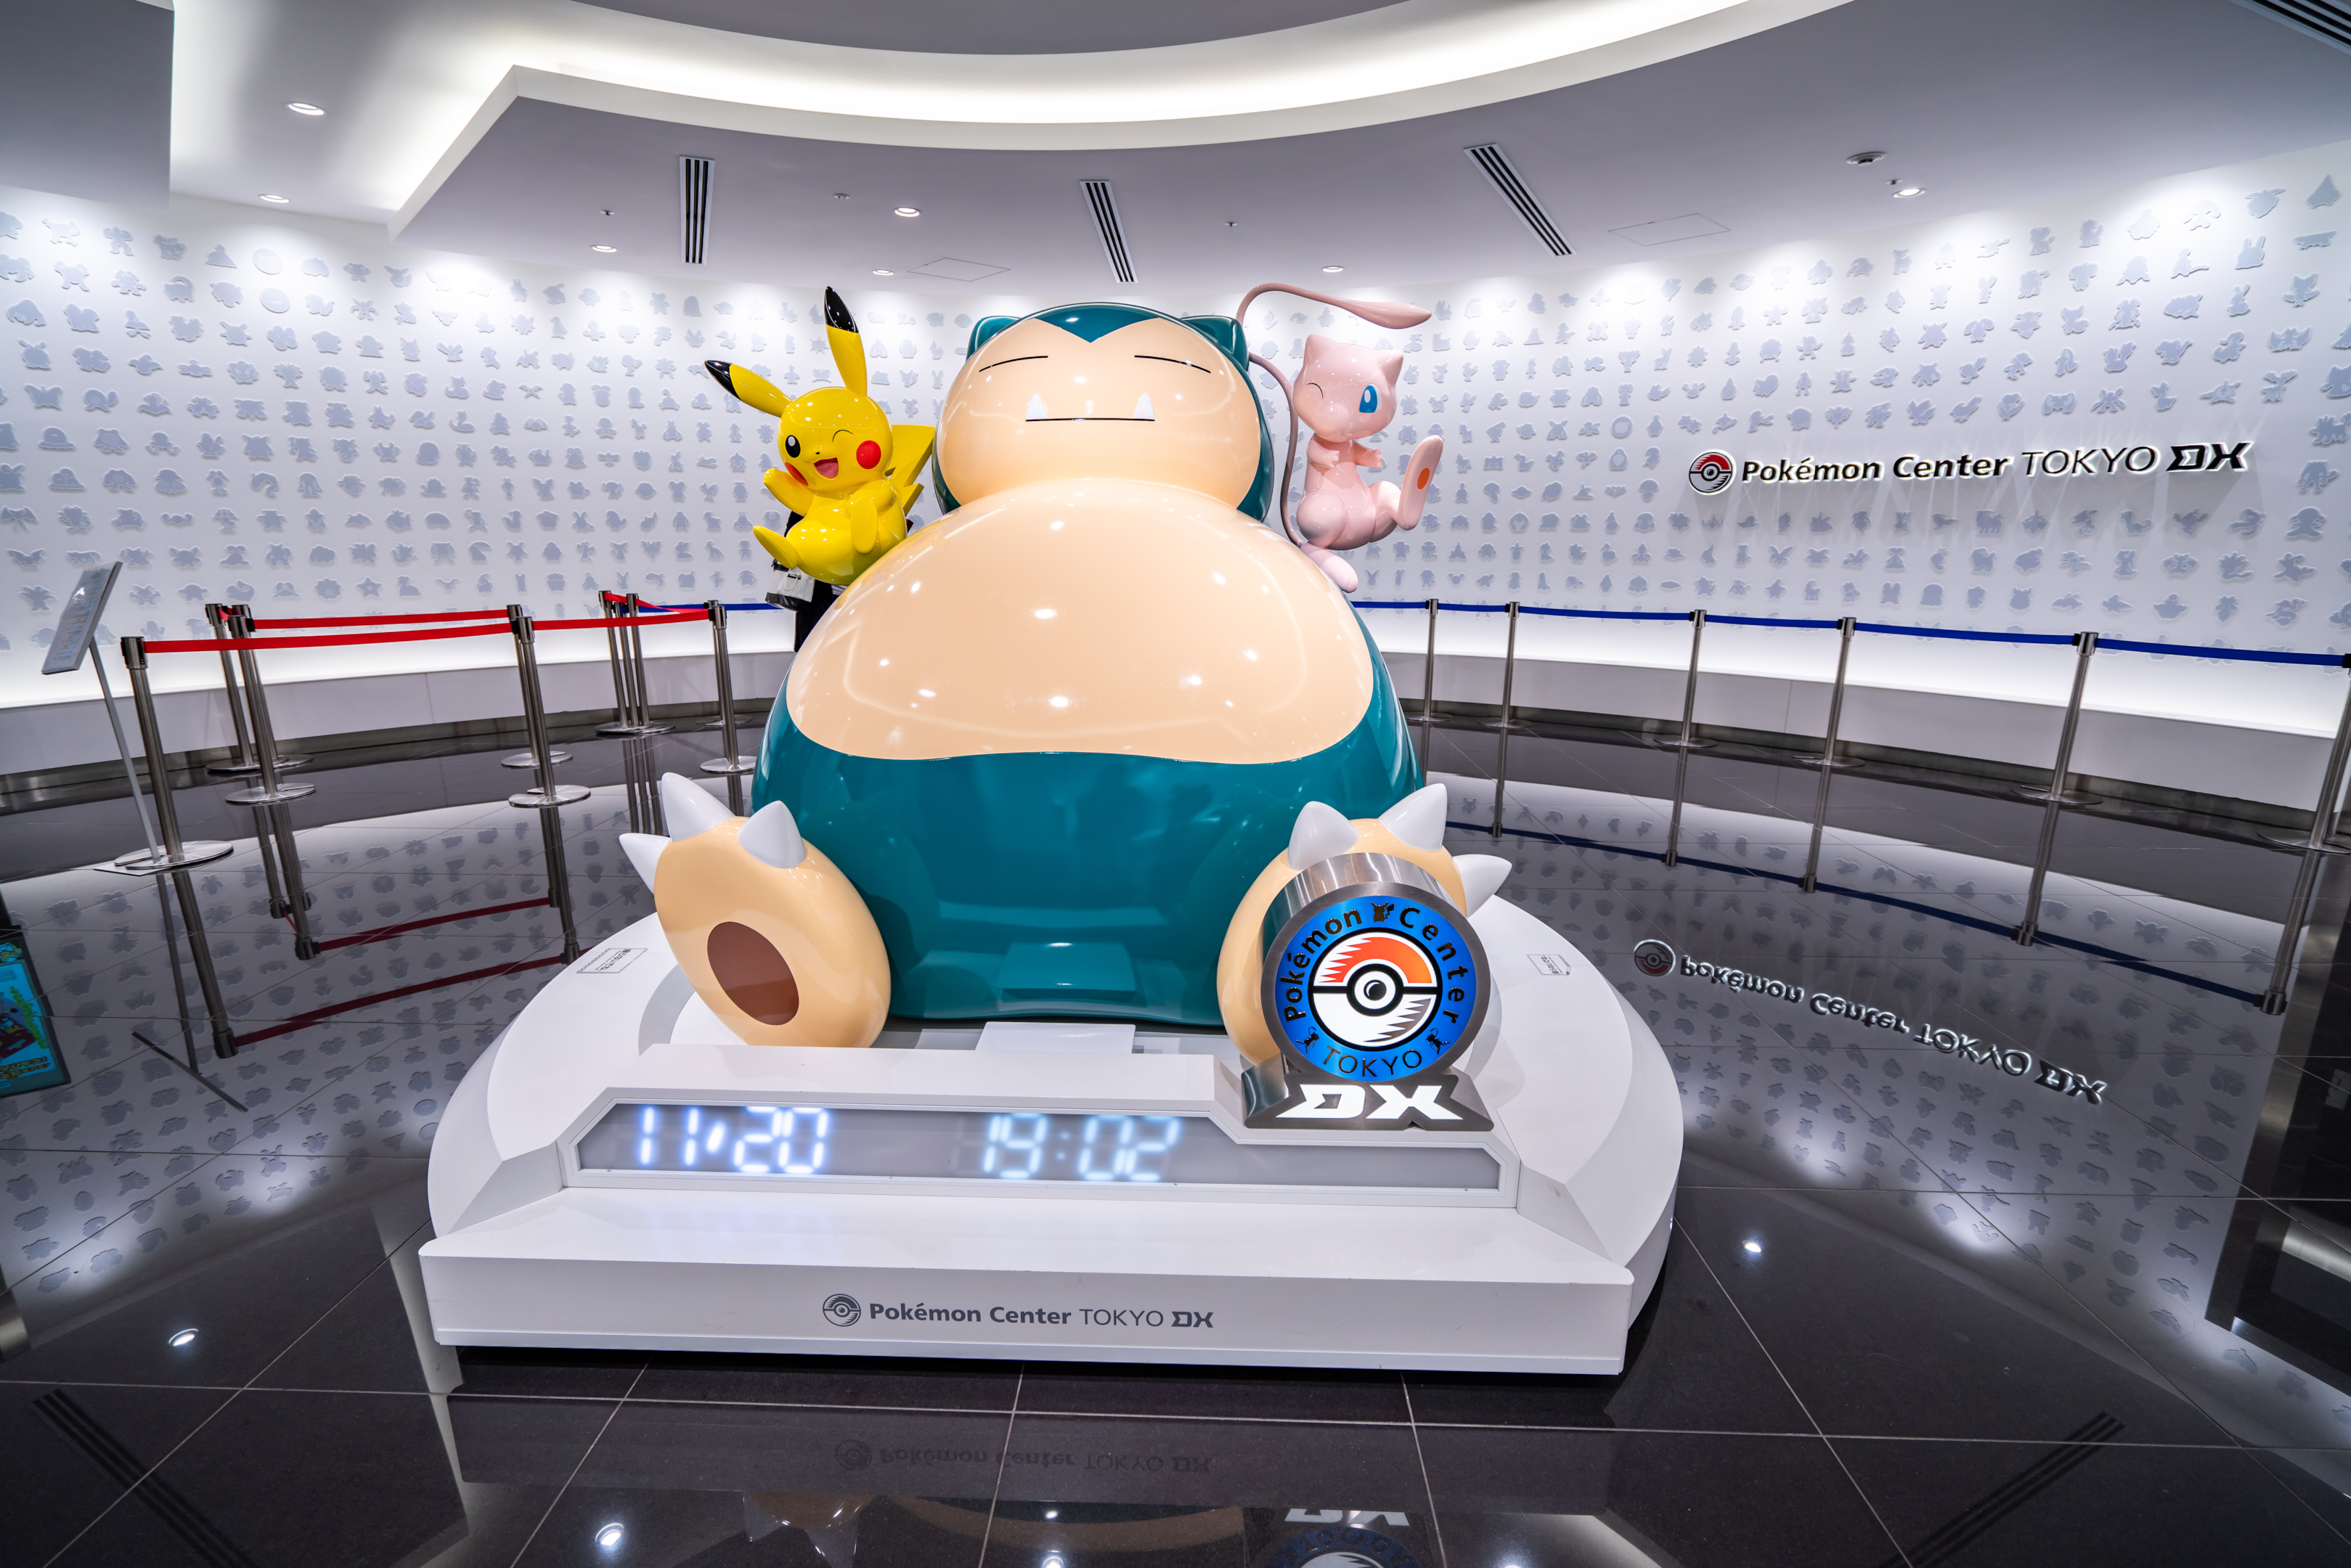 Pokémon Center Tokyo DX featuring Snorlax, Pikachu, and Mew